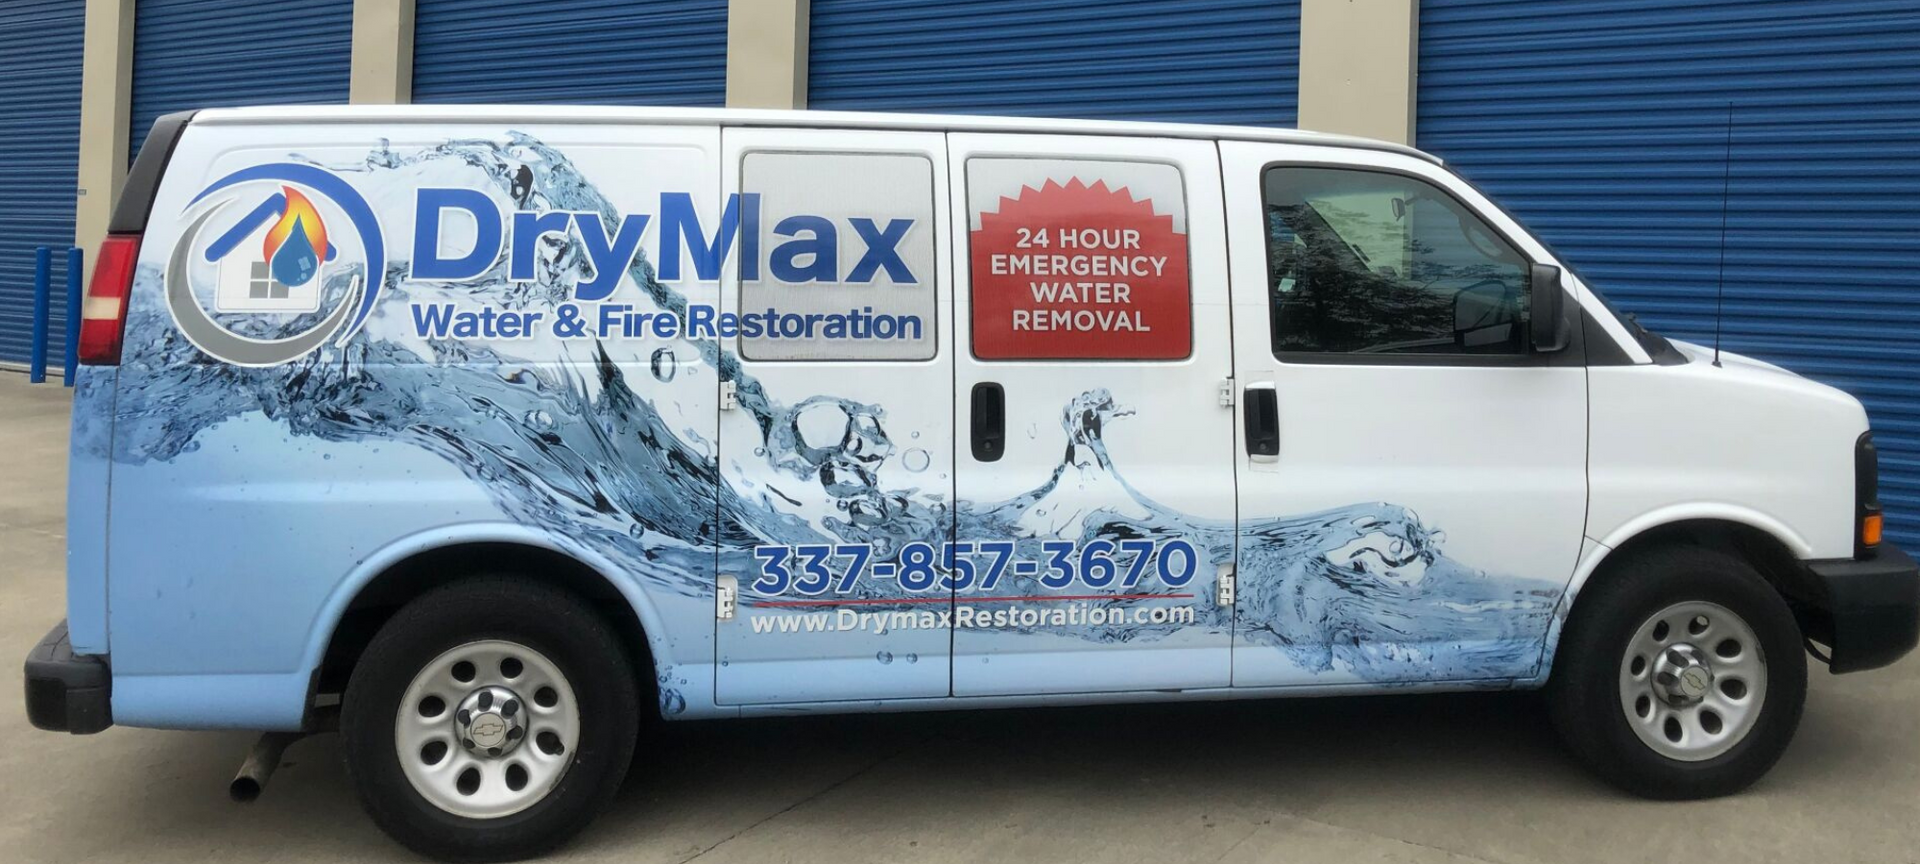 DryMax Water.Fire.Mold Water Damage Restoration Company Louisiana